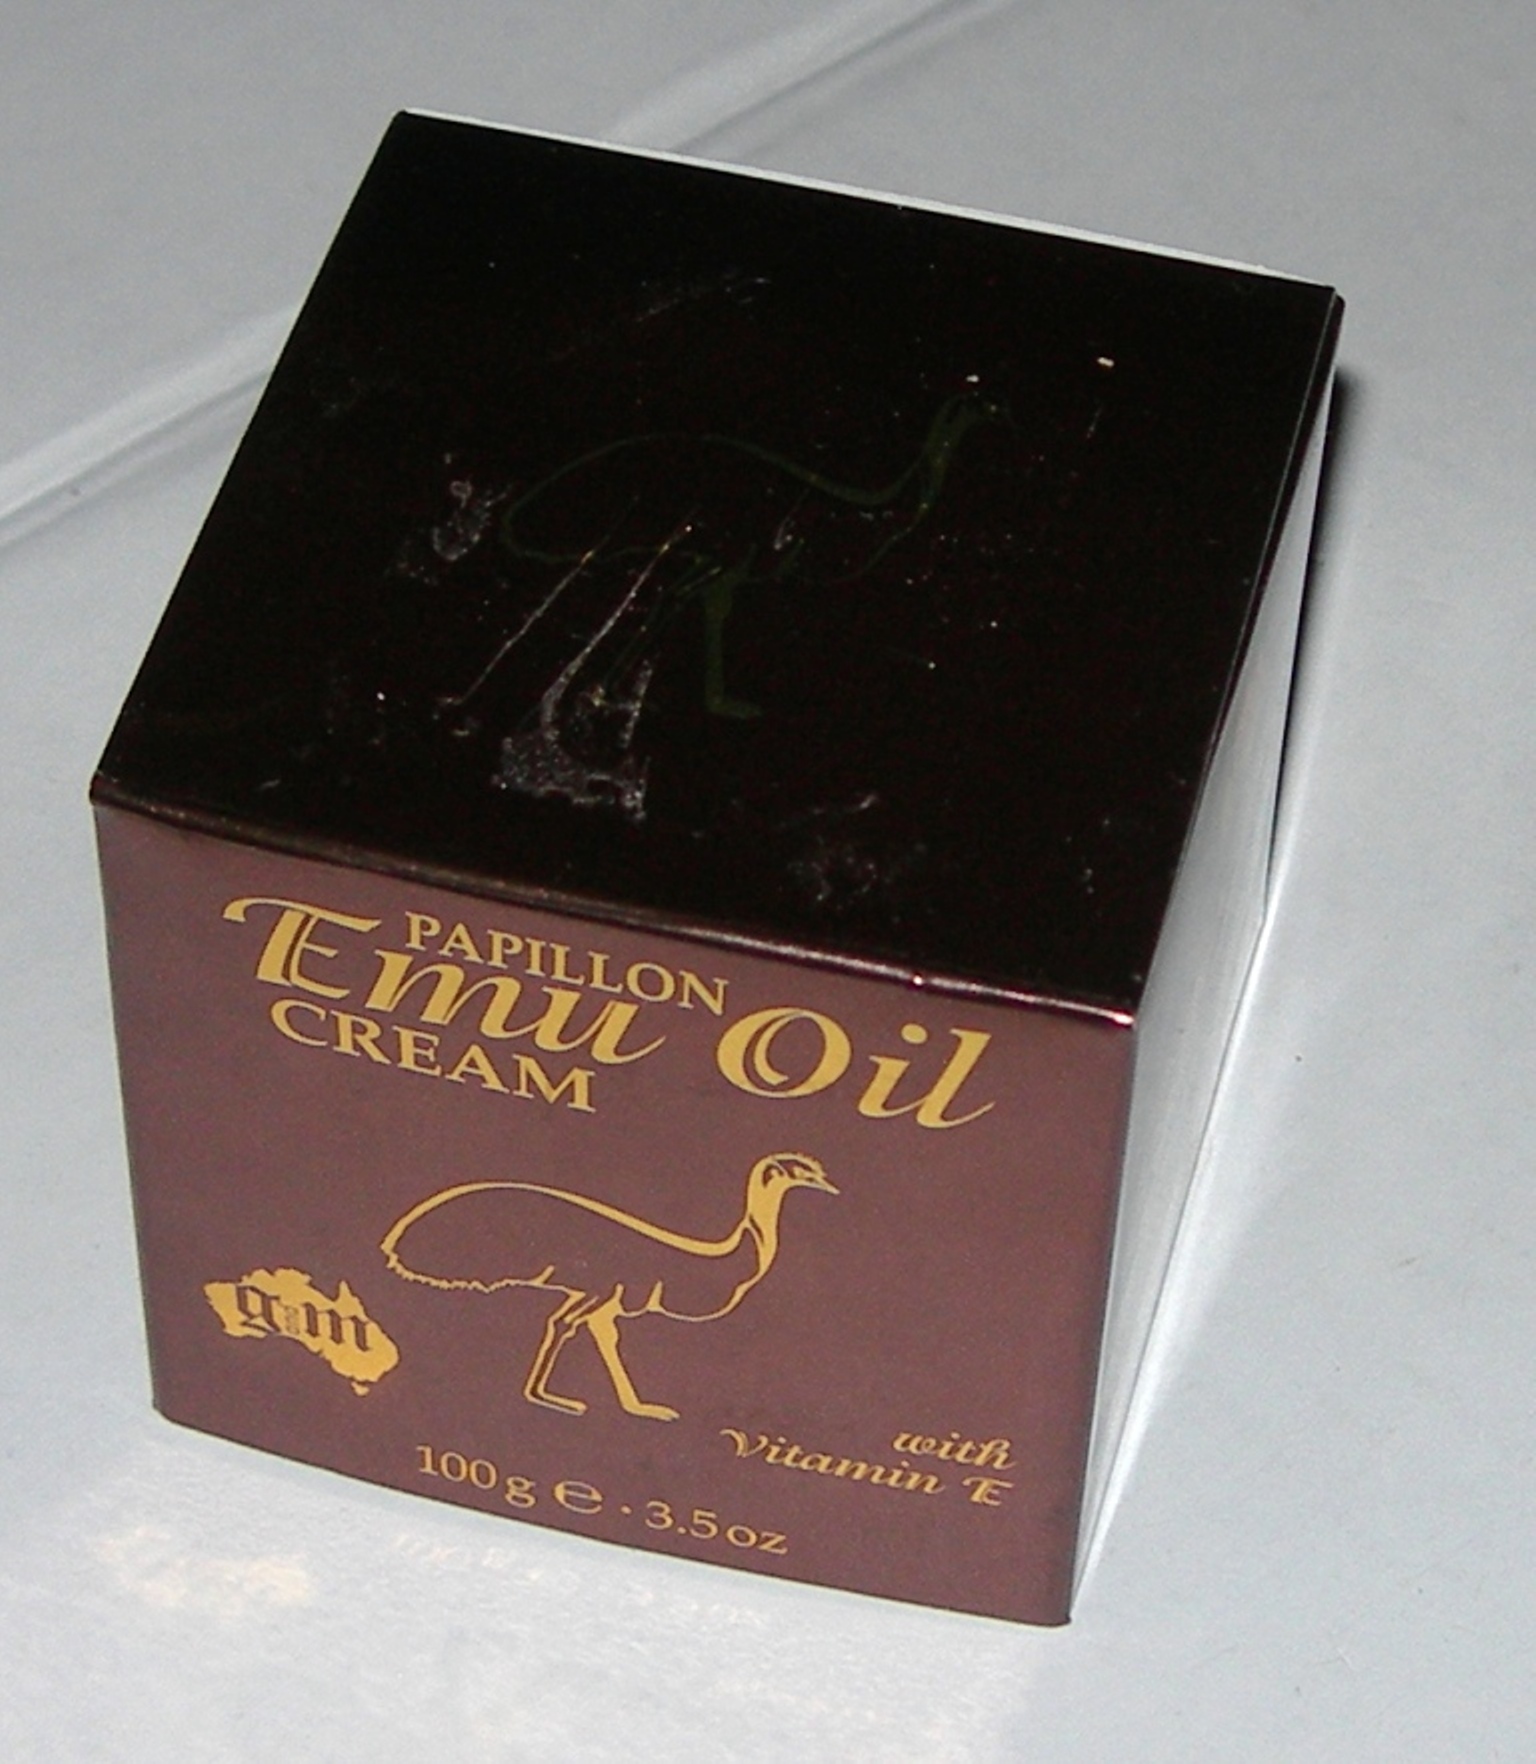 Emu Oil cream & Essence